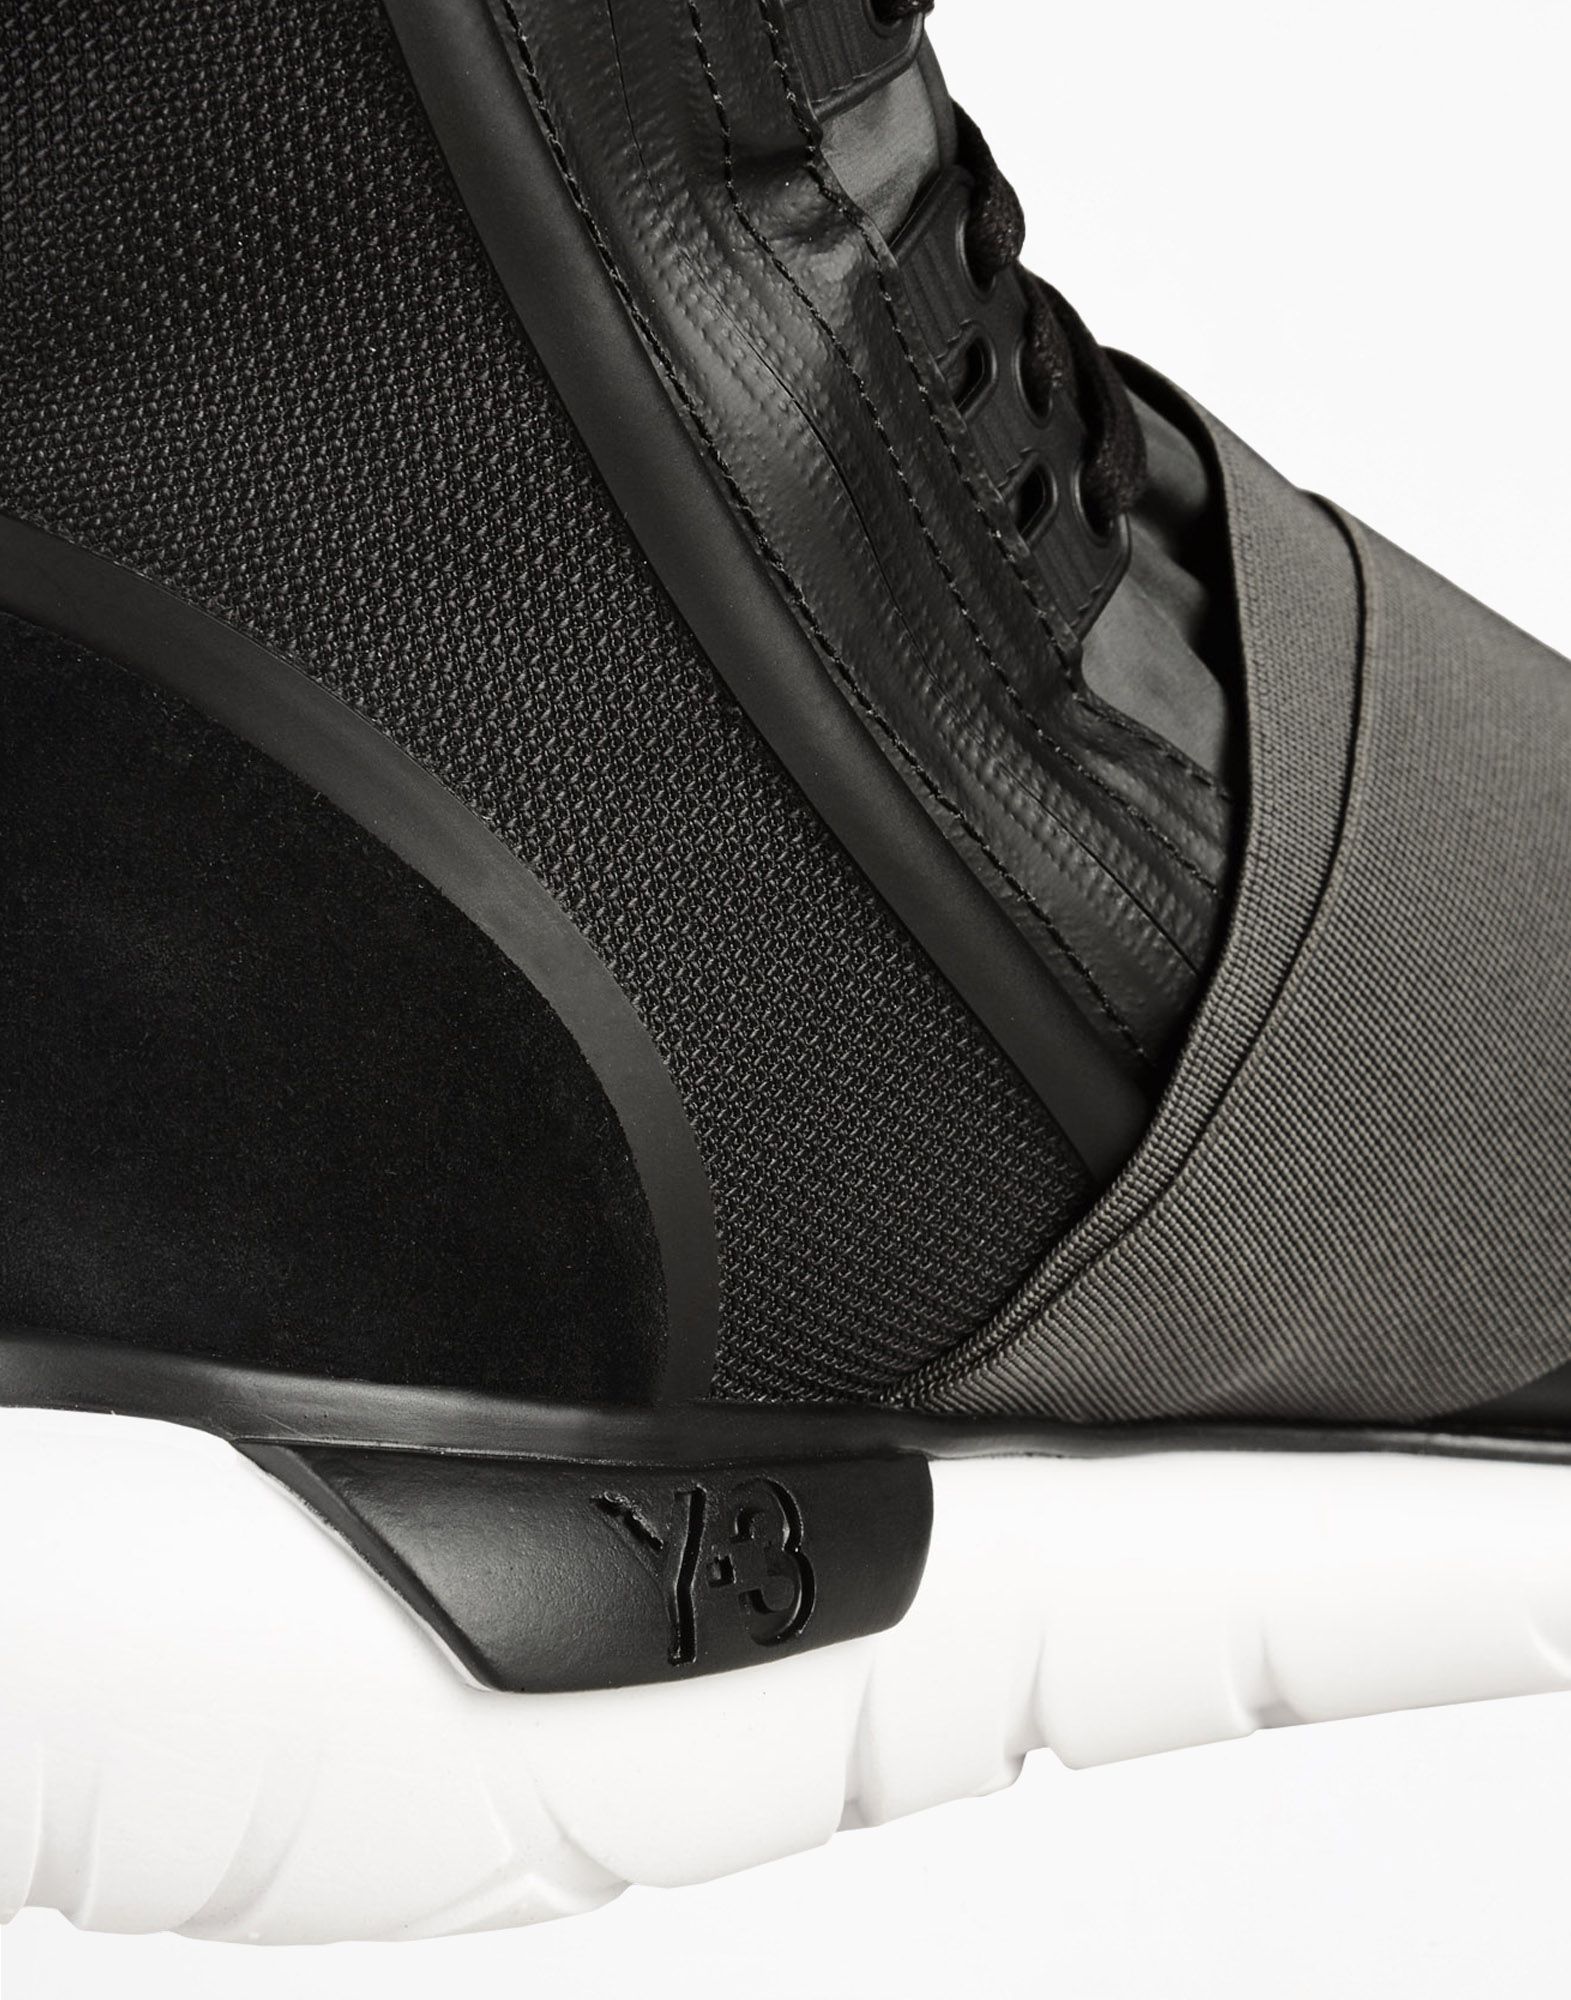 Y 3 QASA BOOT for Men | Adidas Y-3 Official Store